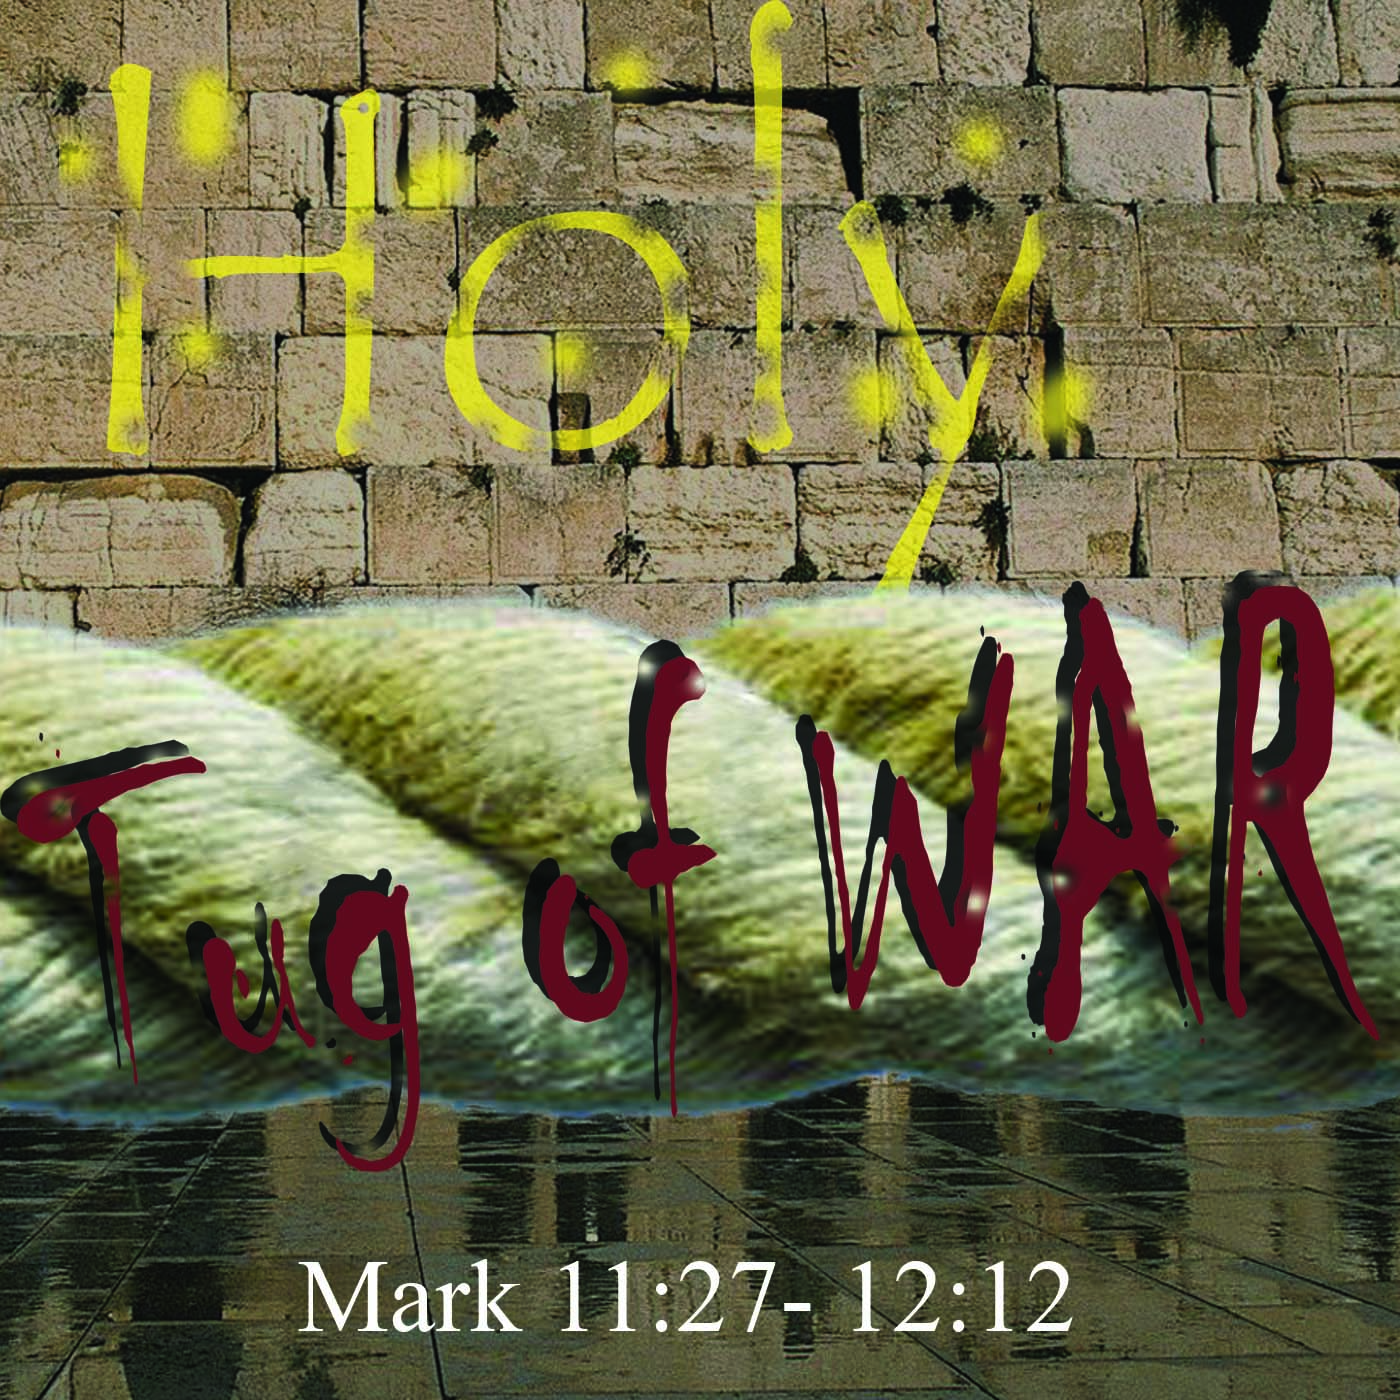 Mark 11:27-12:12 Holy Tug of War